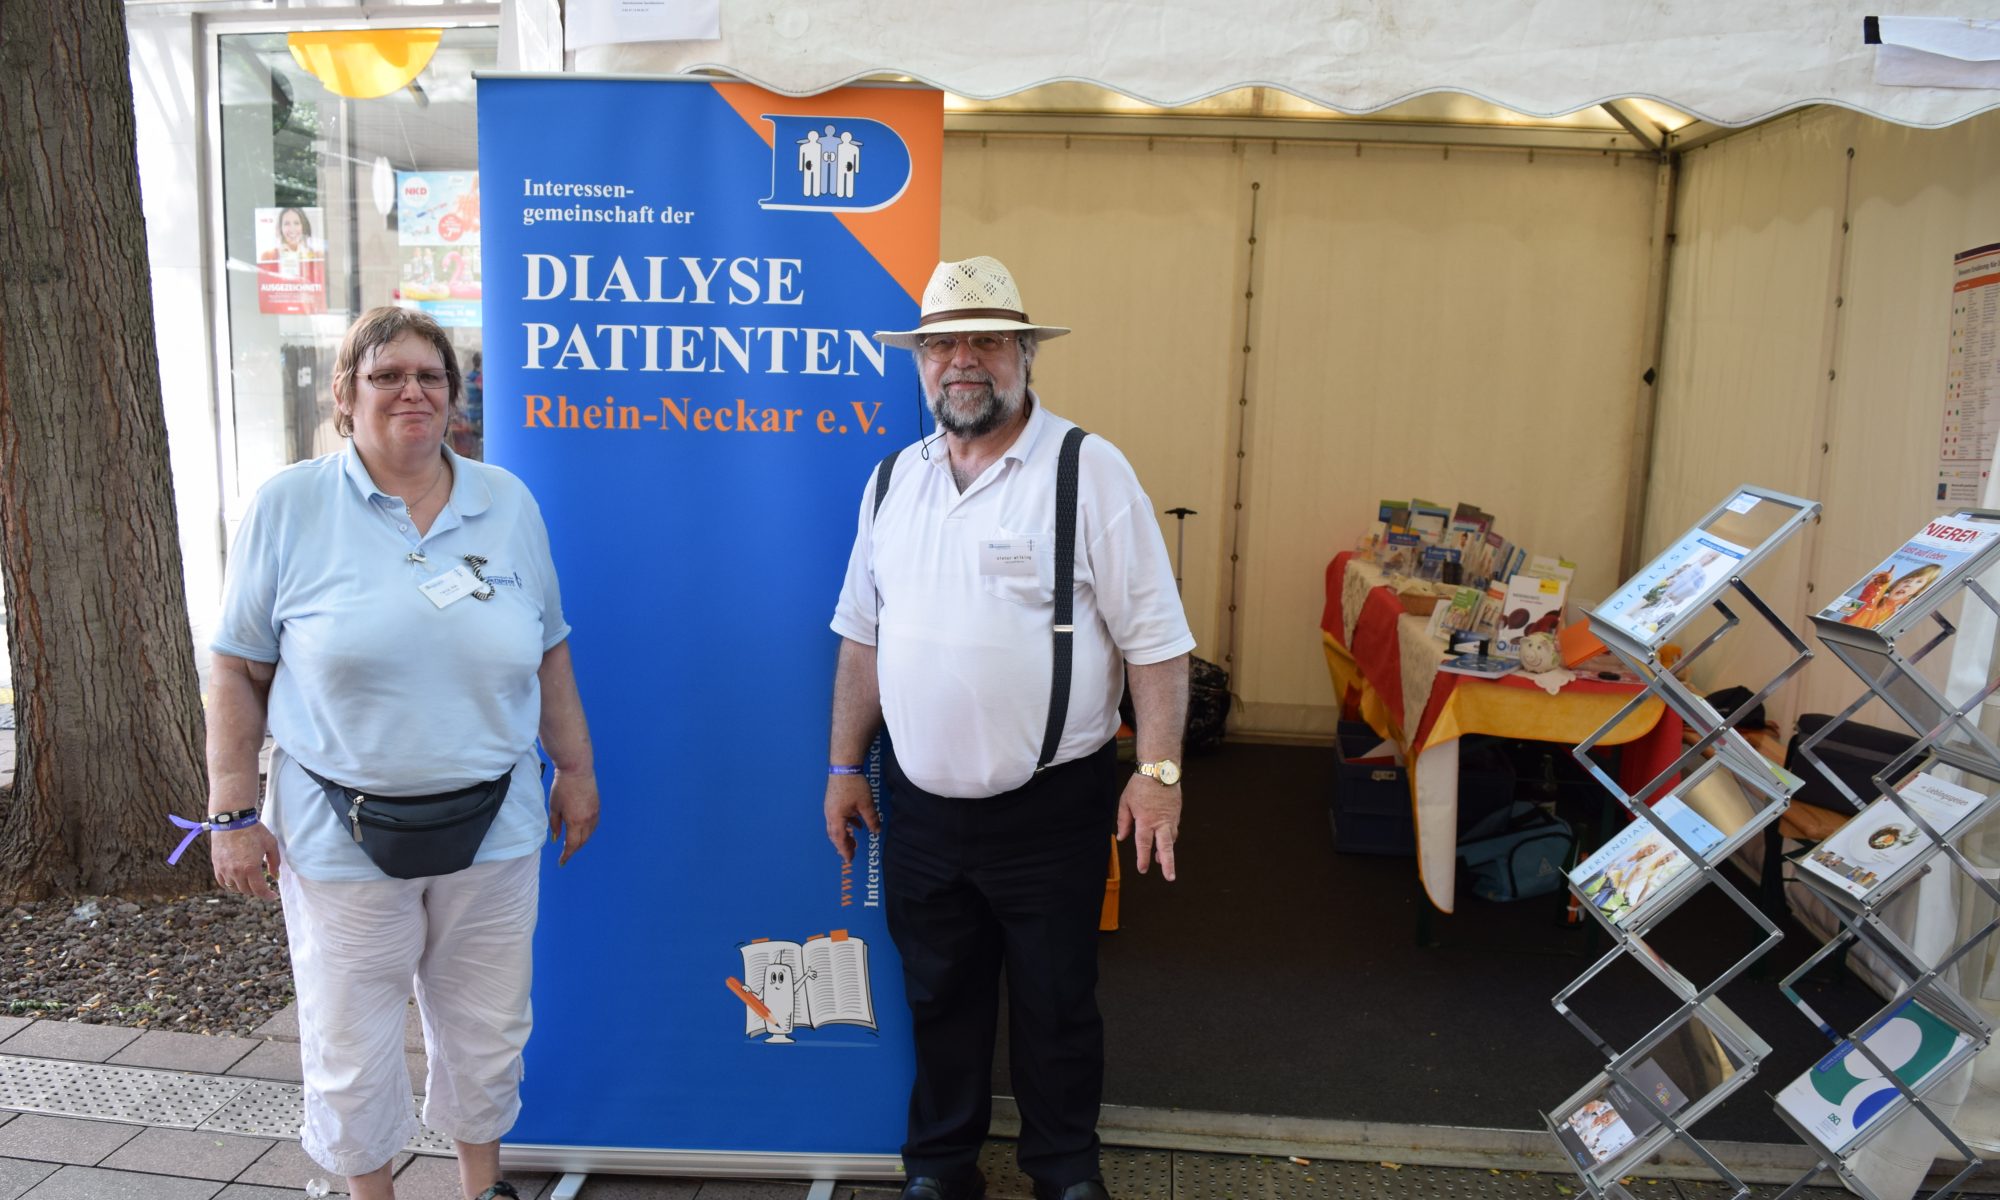 Interessengemeinschaft der Dialysepatienten Rhein-Neckar e.V.